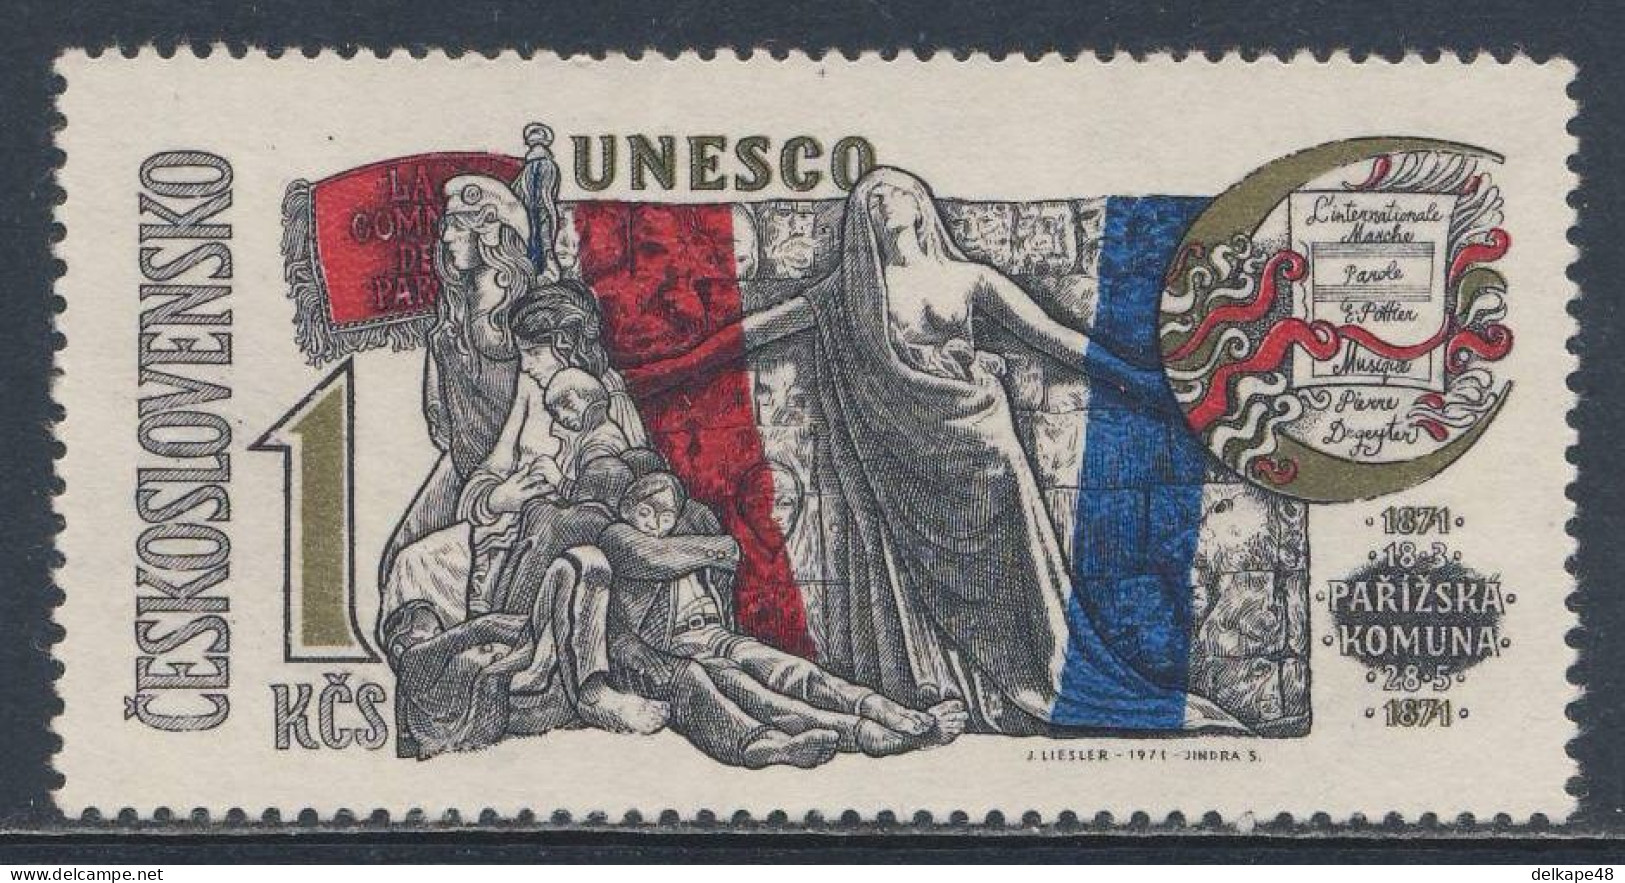 Tschechoslowakei Czechoslovakia 1971 Mi 1992 YT 1840 SG 1950 ** 100 Jahre Pariser Kommune, Denkmal / Unesco - UNESCO